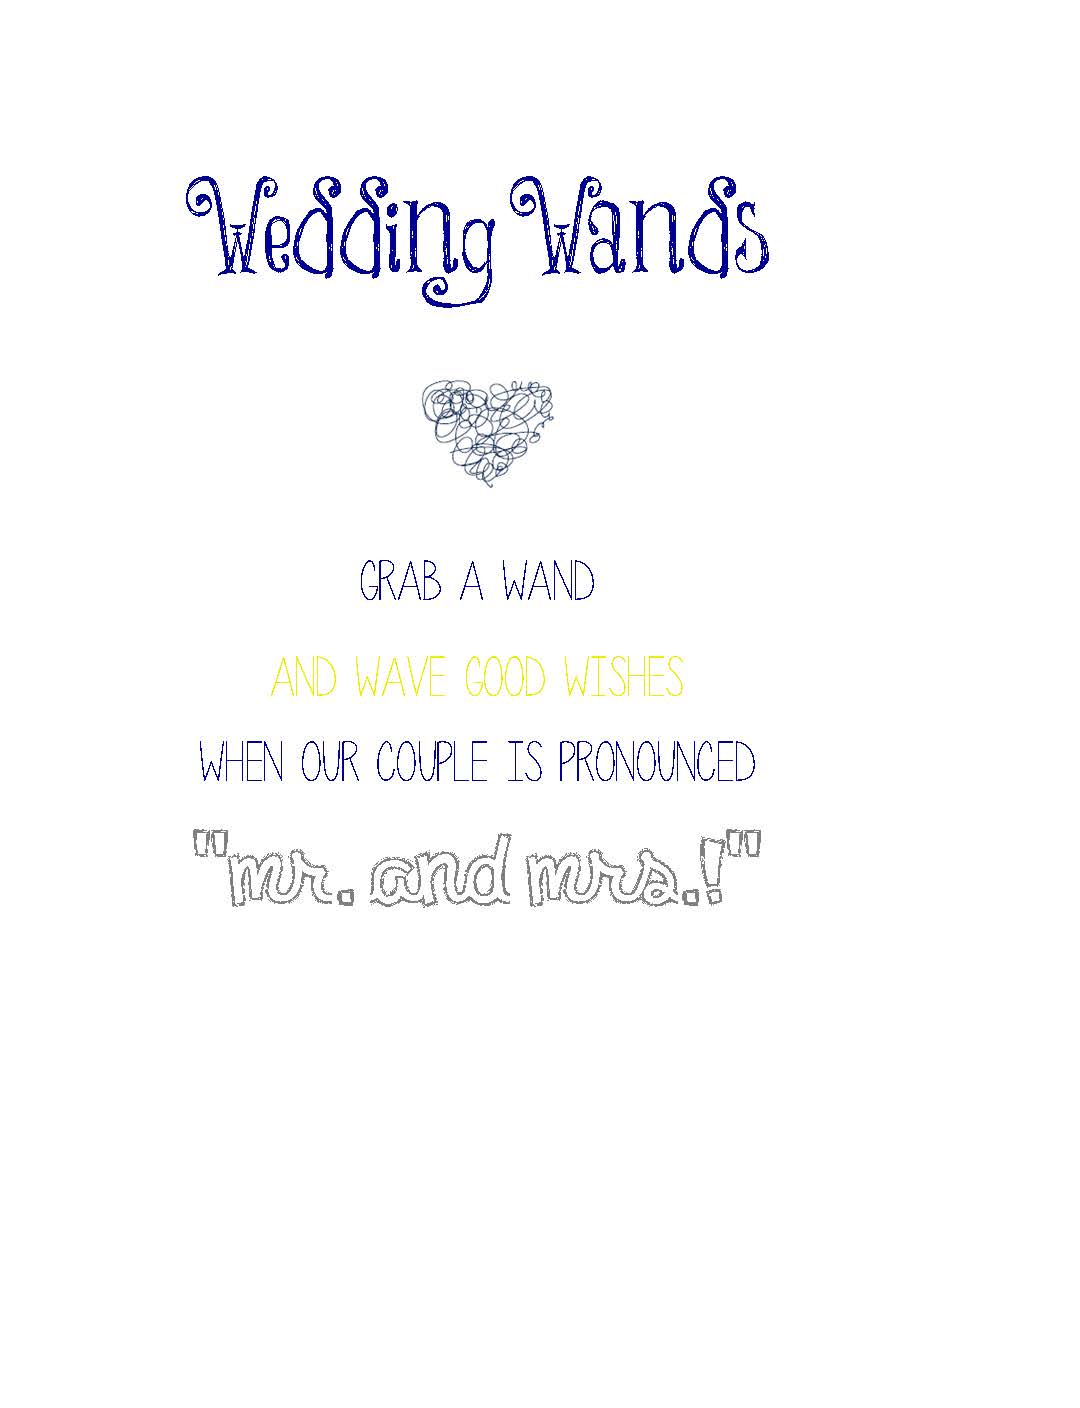 wedding-wands-9-37-28-pm